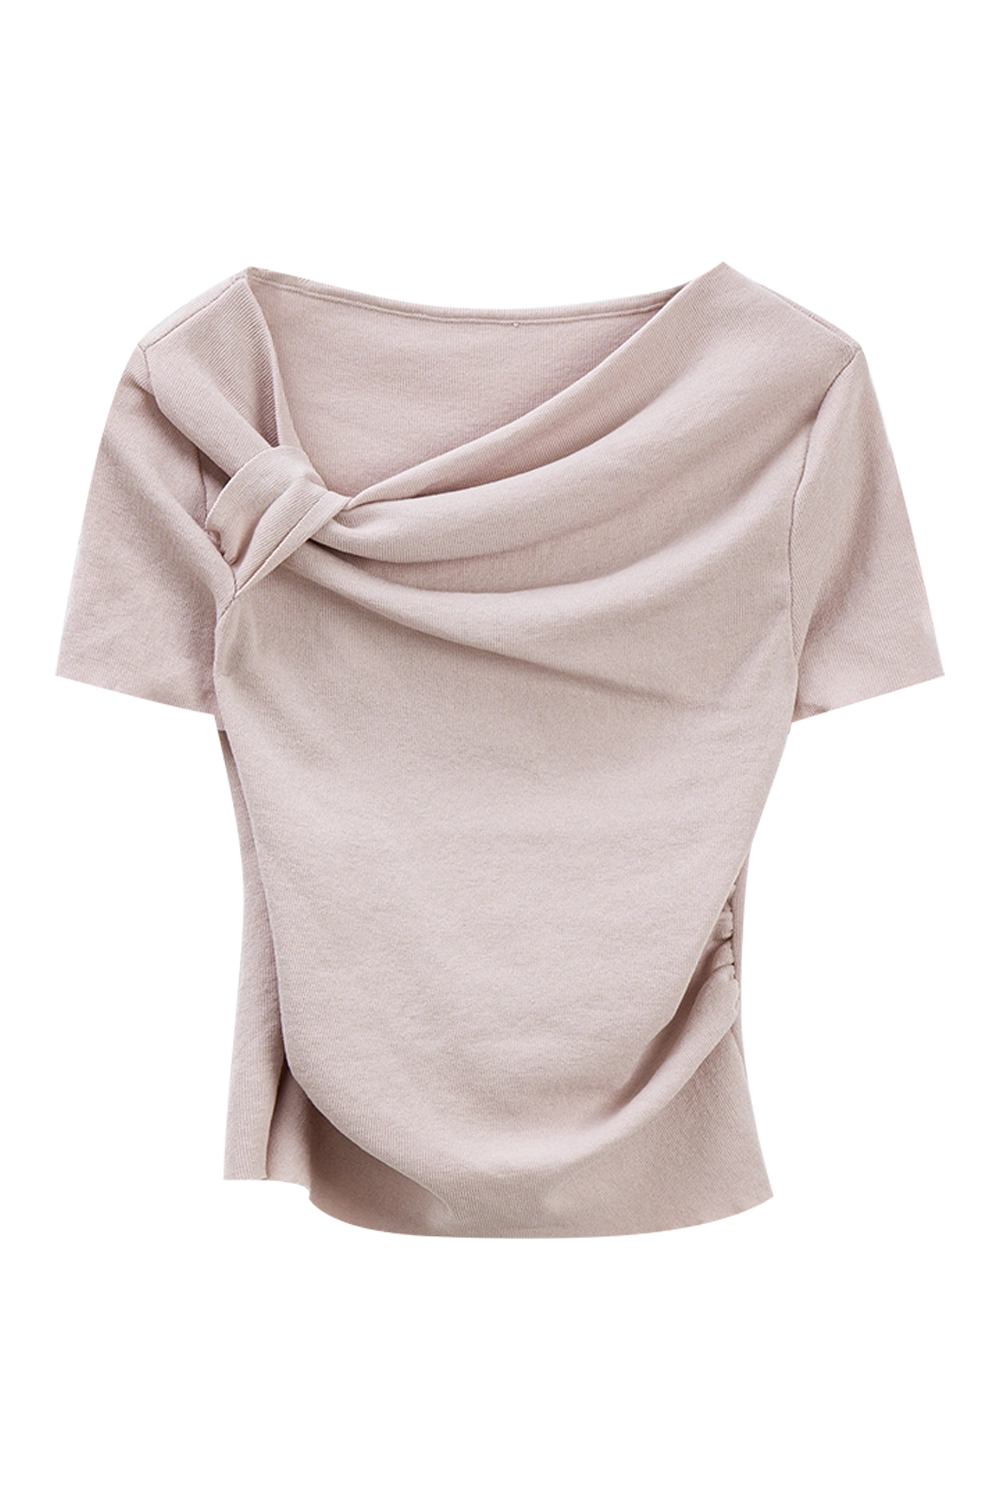 Women's Simple Knot Front Short-Sleeve T-Shirt